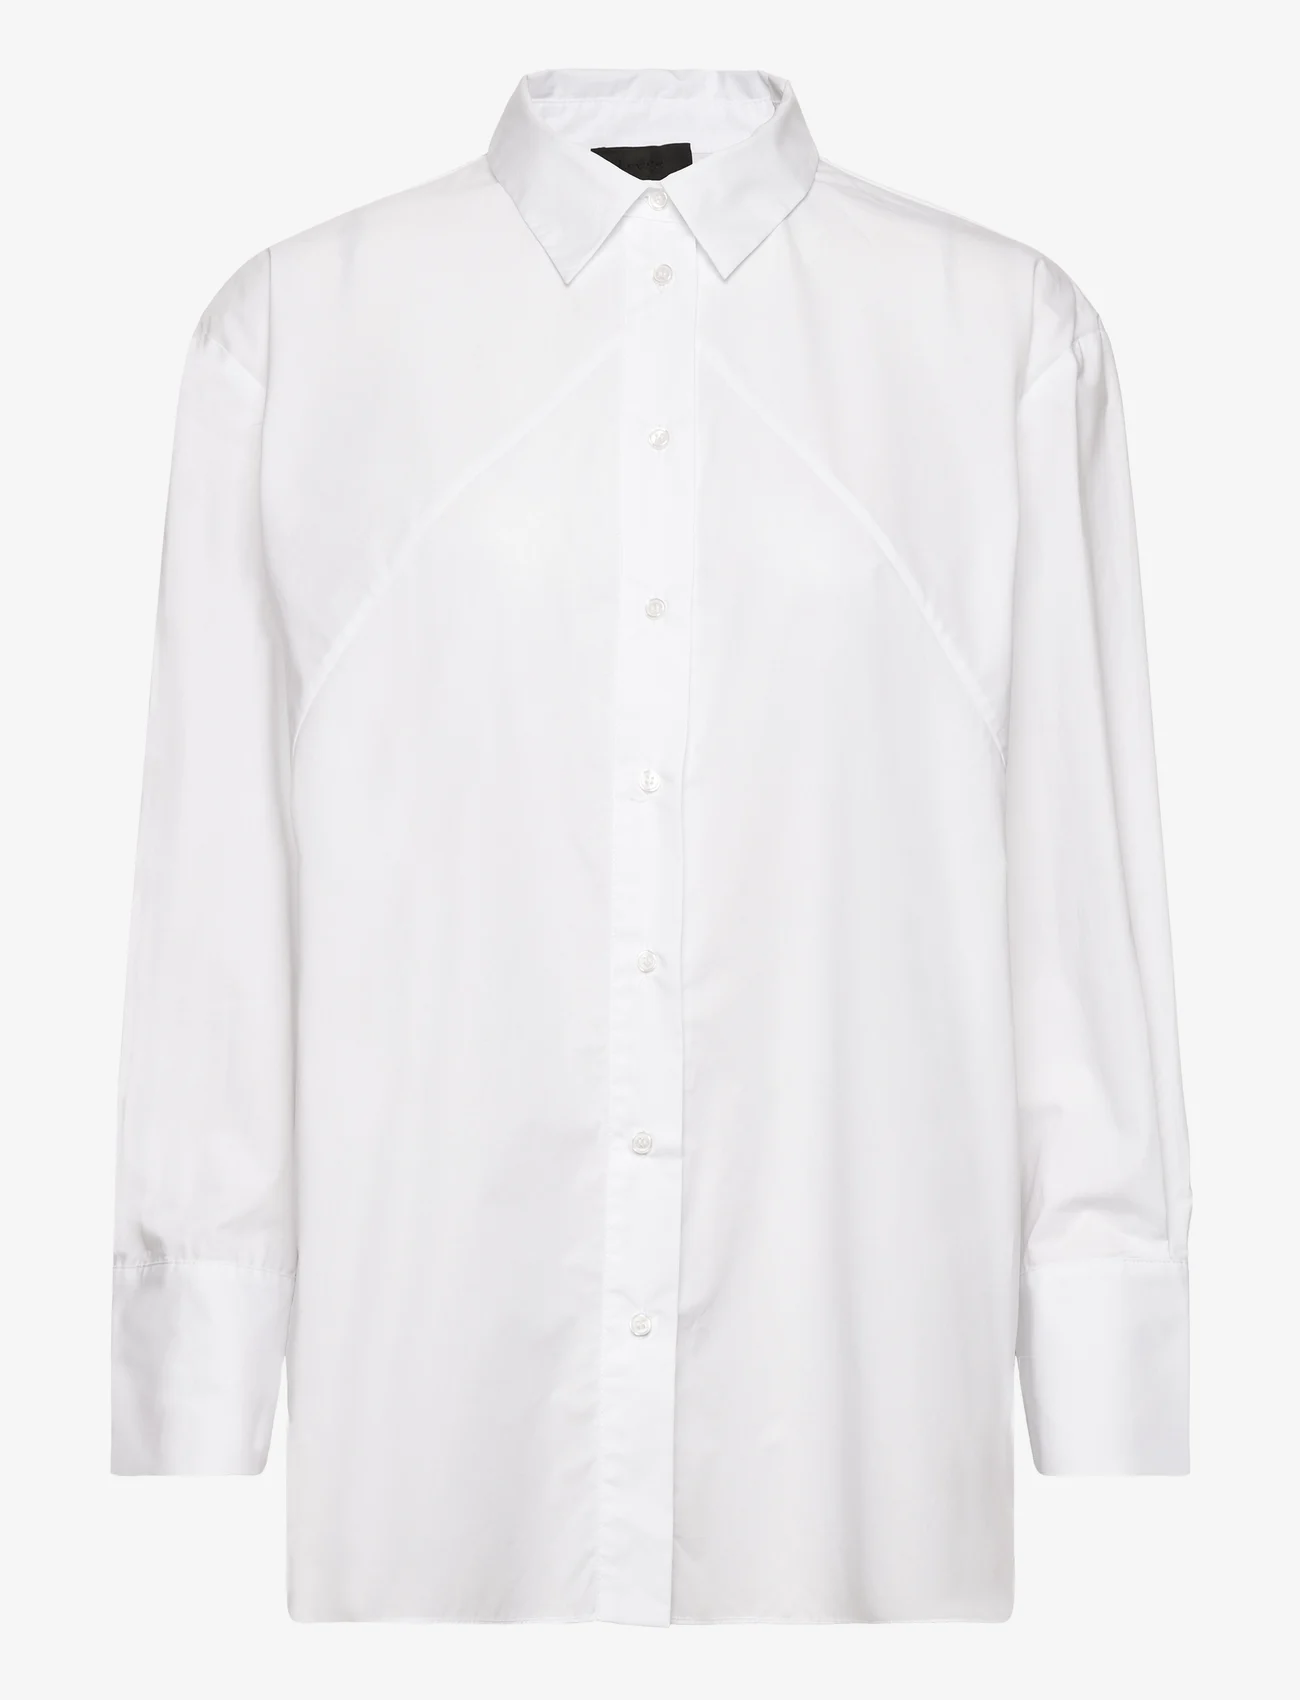 Levete Room - LR-BRADIE - langärmlige hemden - l100 - white - 0